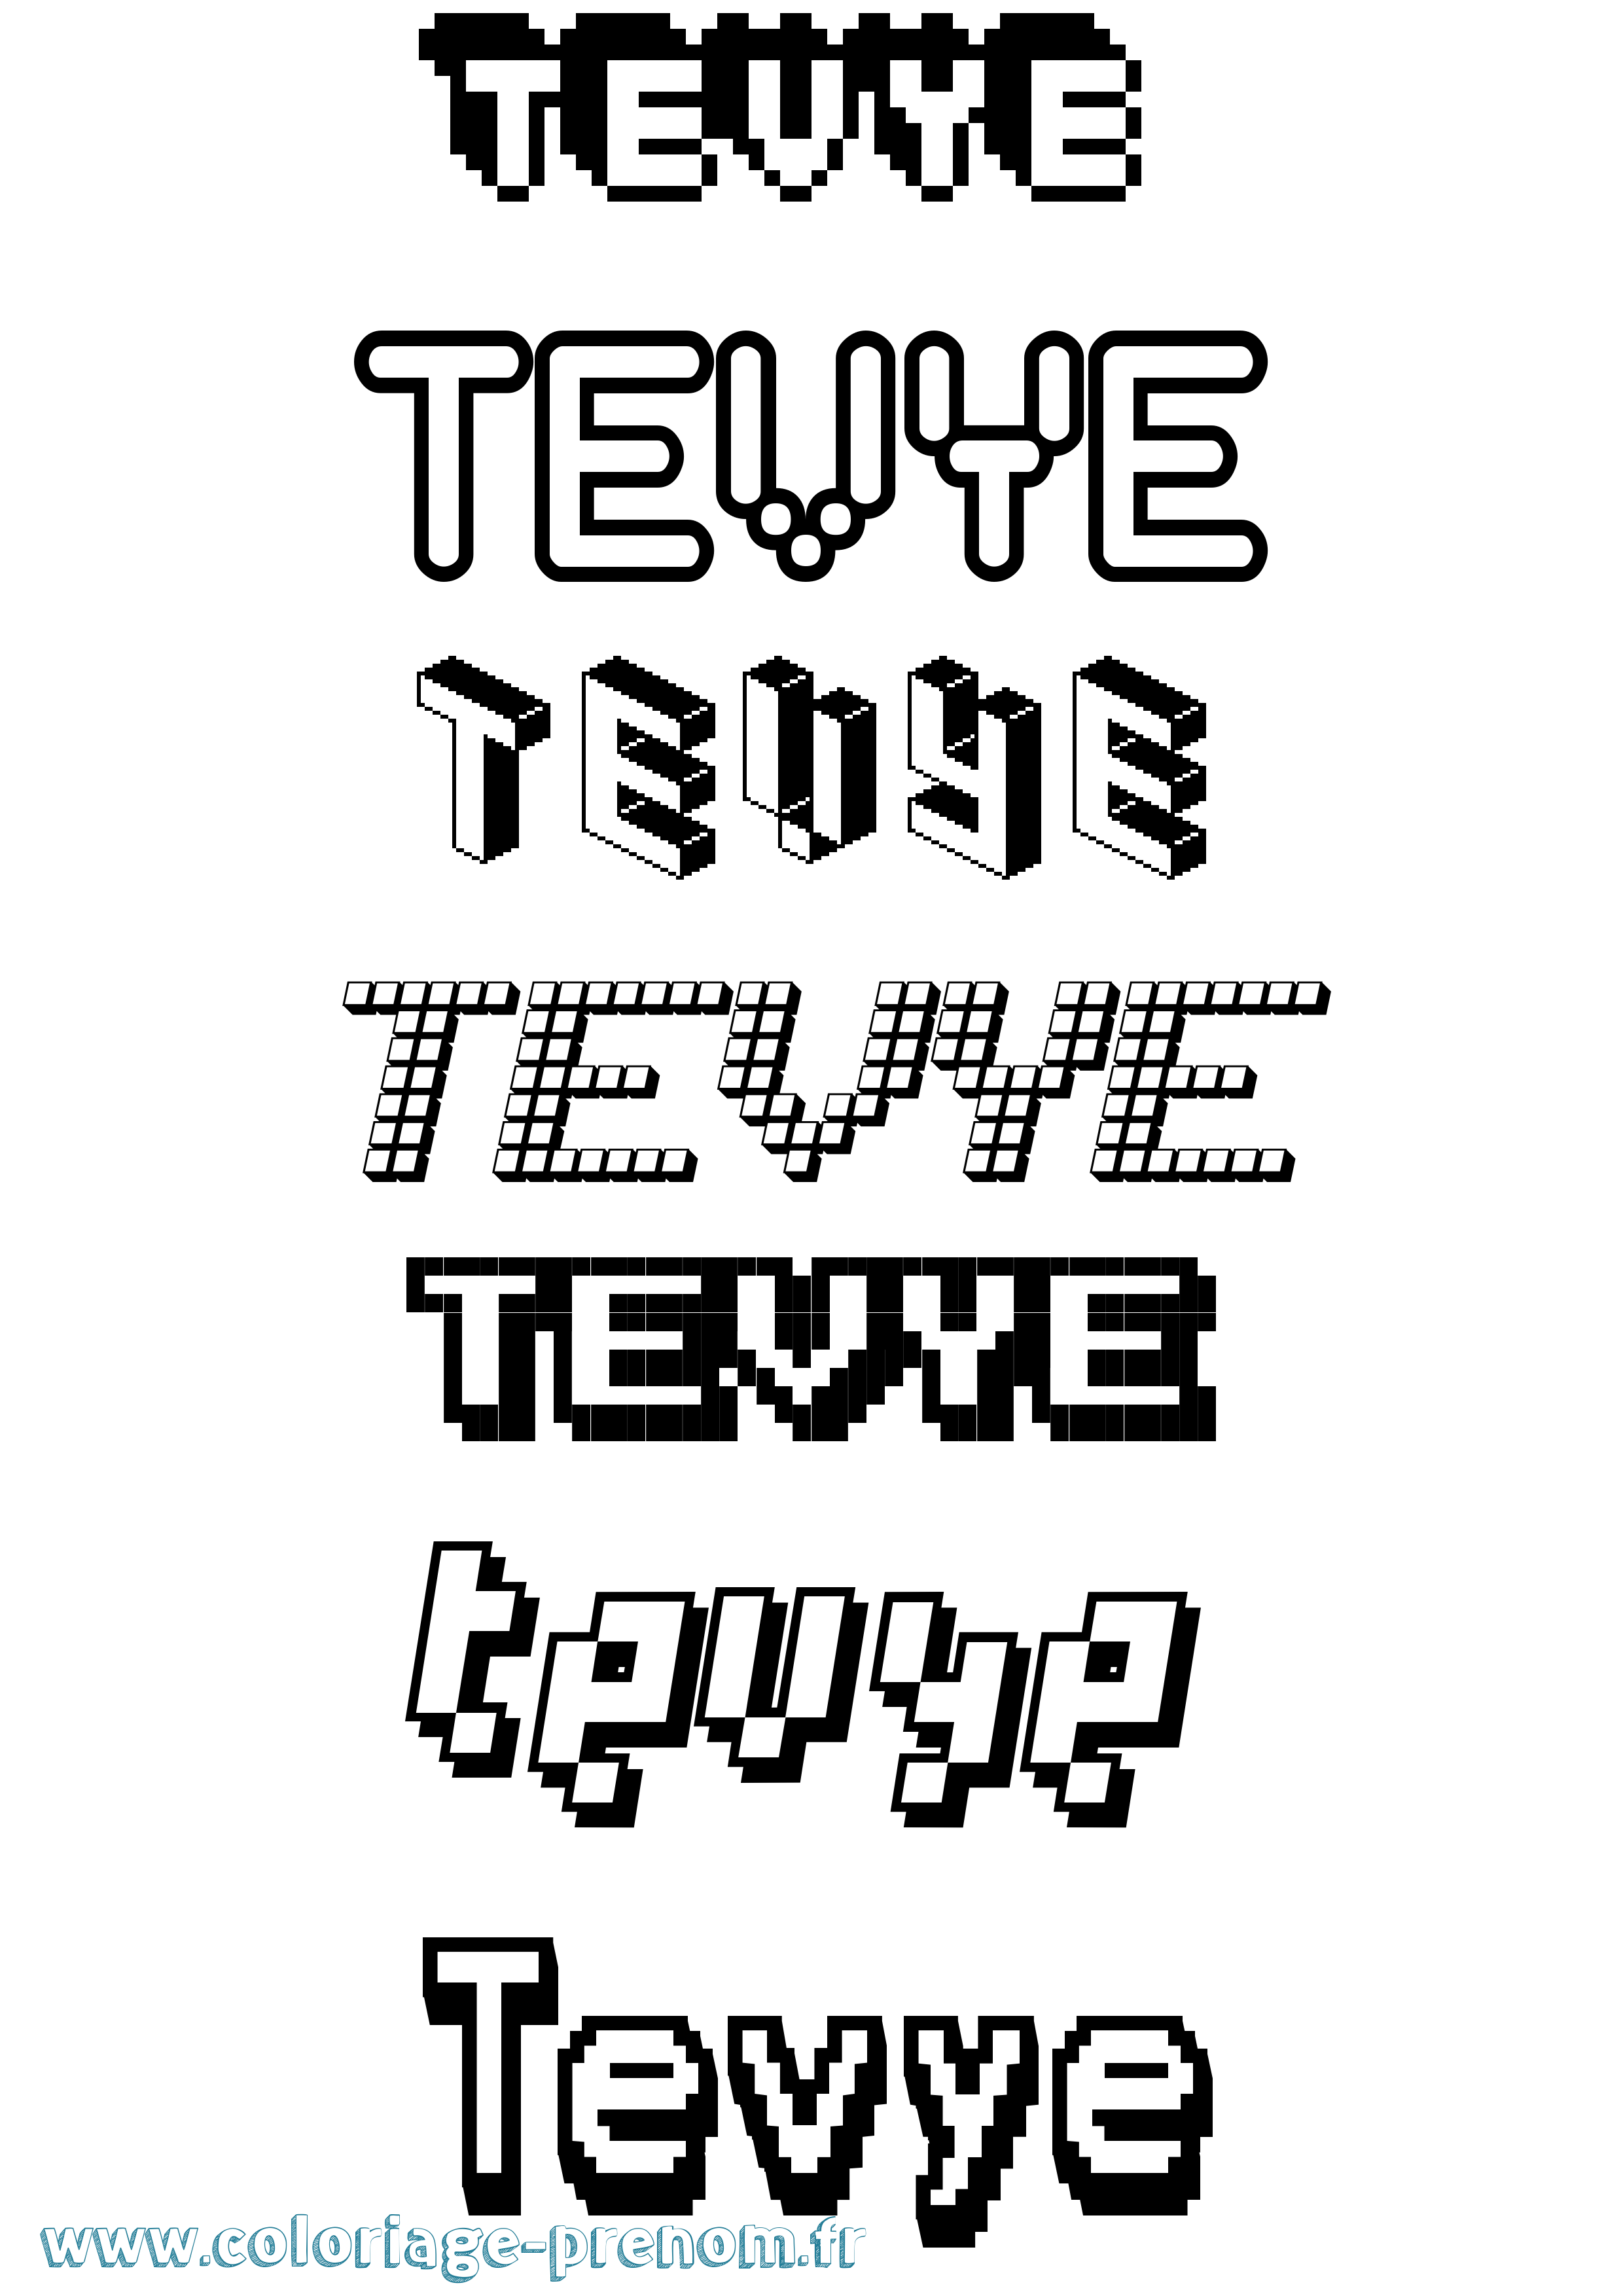 Coloriage prénom Tevye Pixel